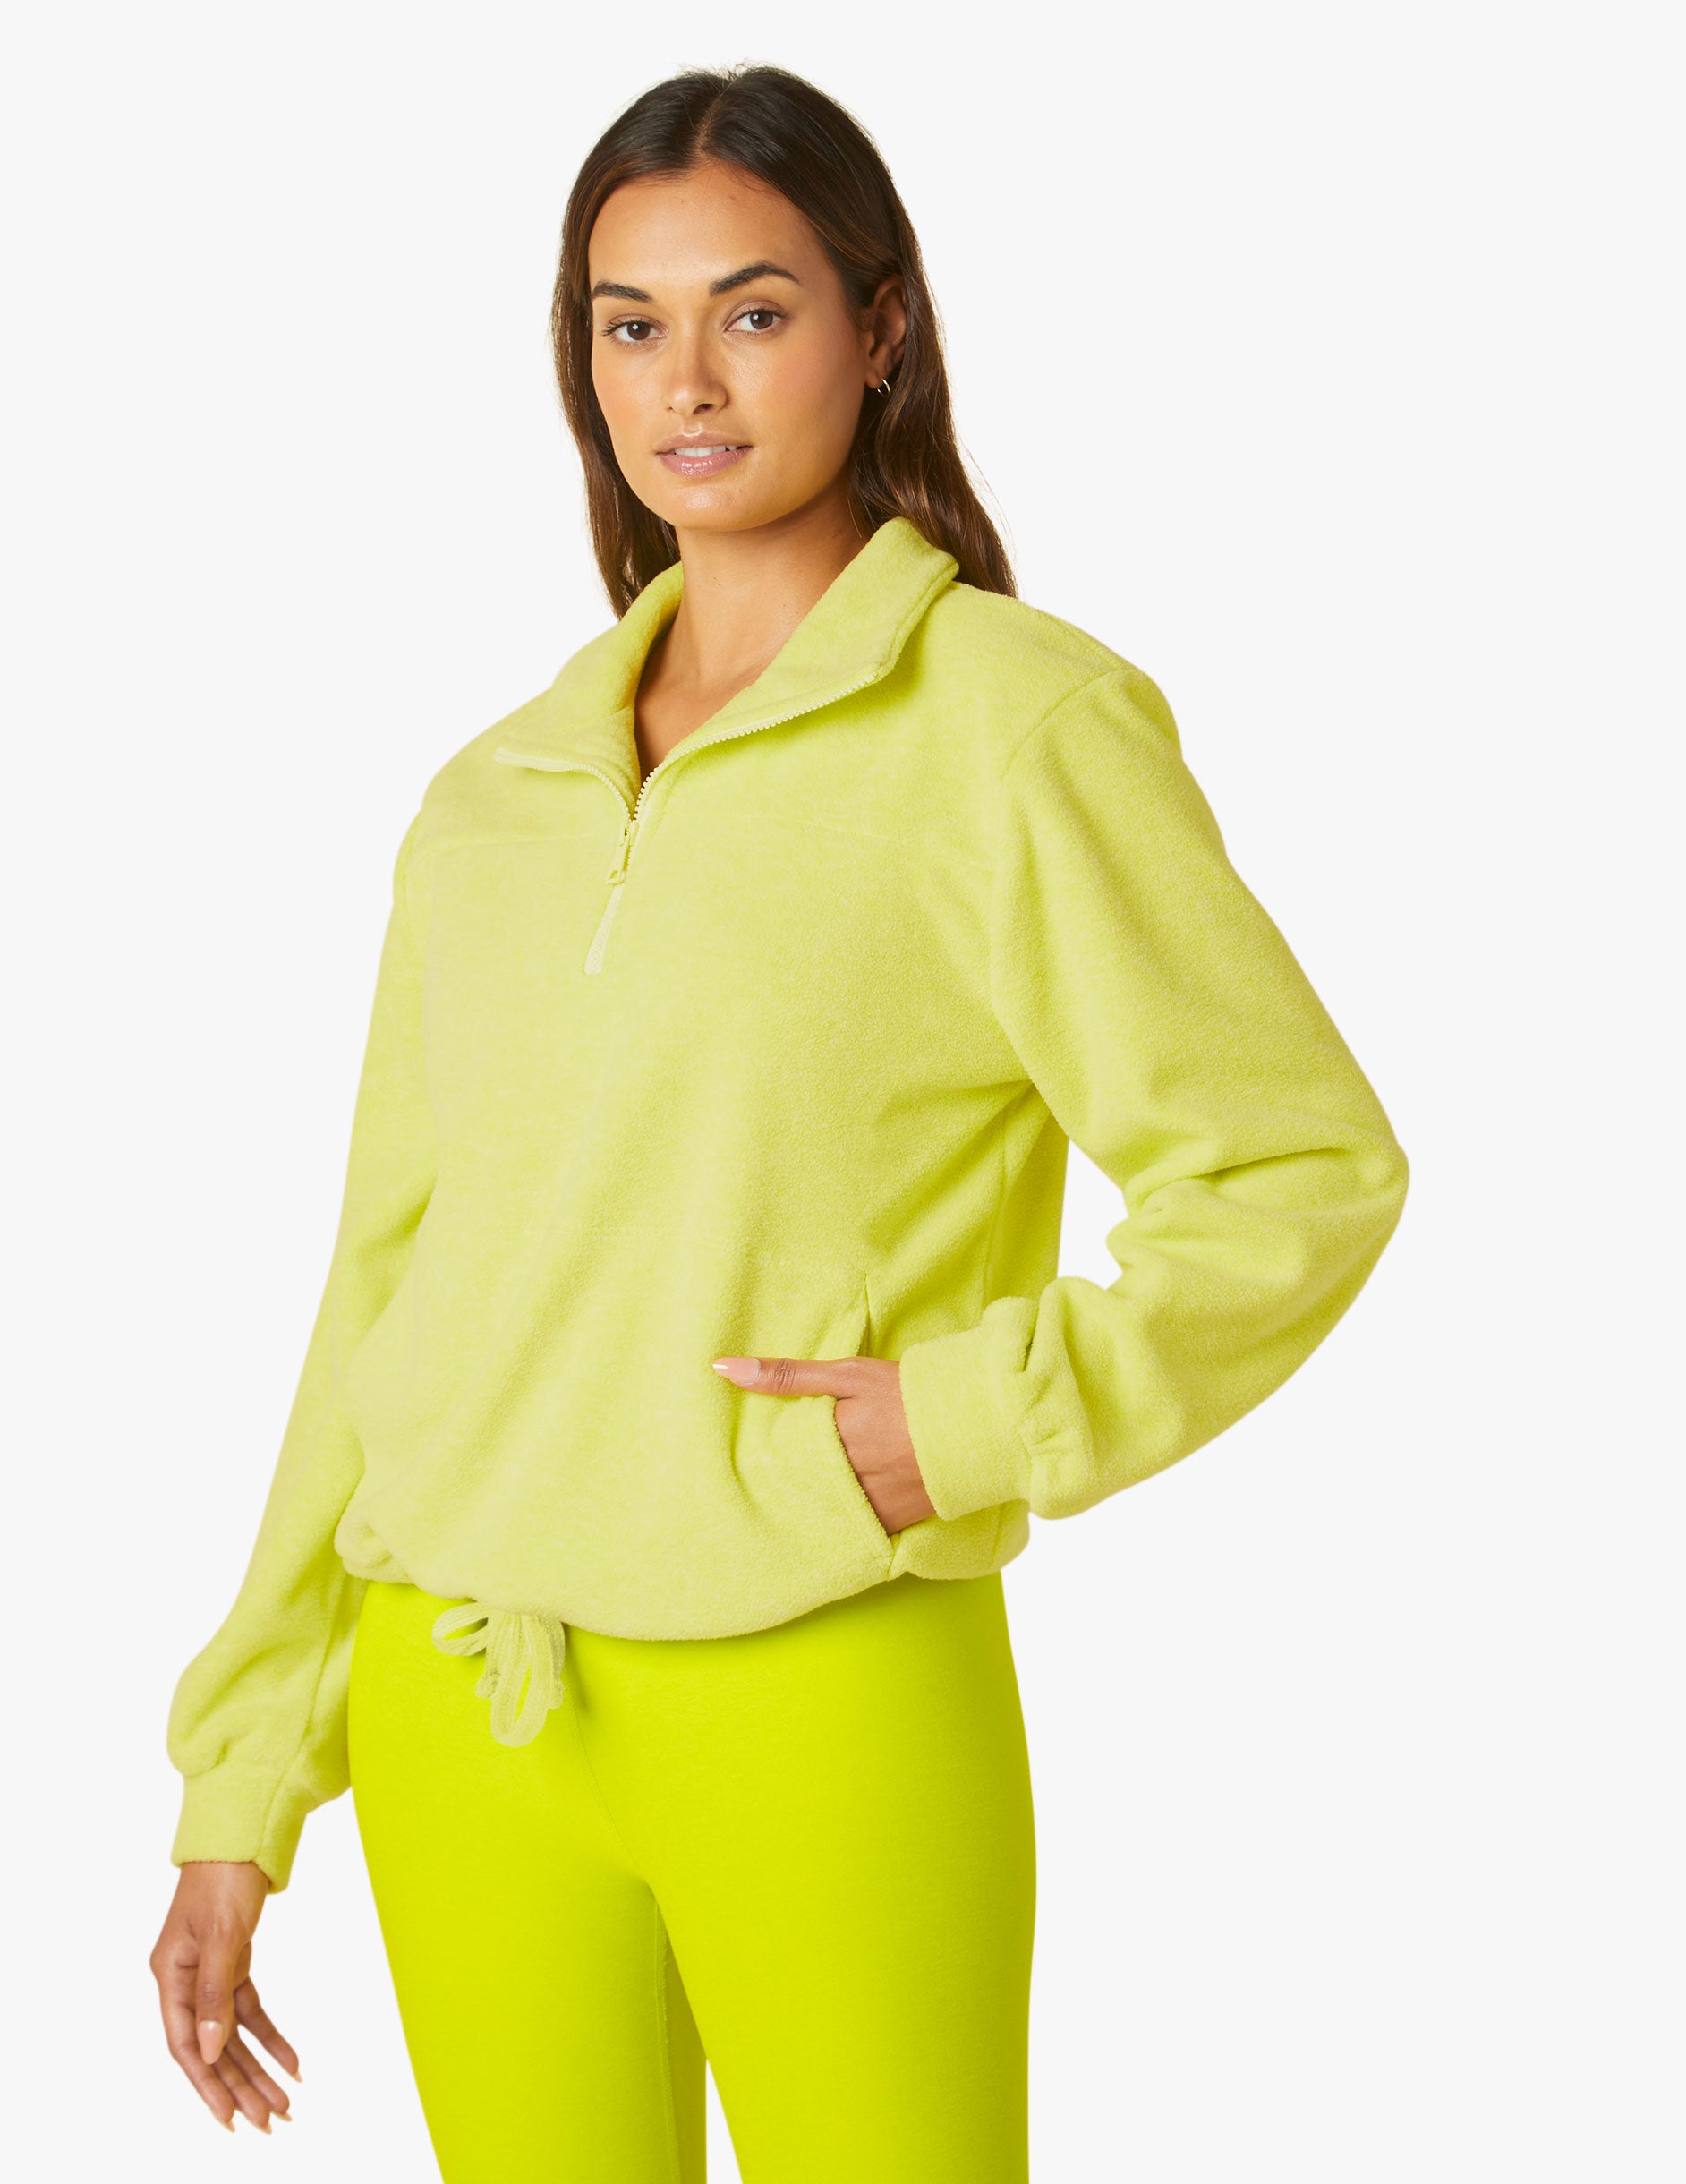 neon yellow 3/4 zip up jacket with drawstring at waist